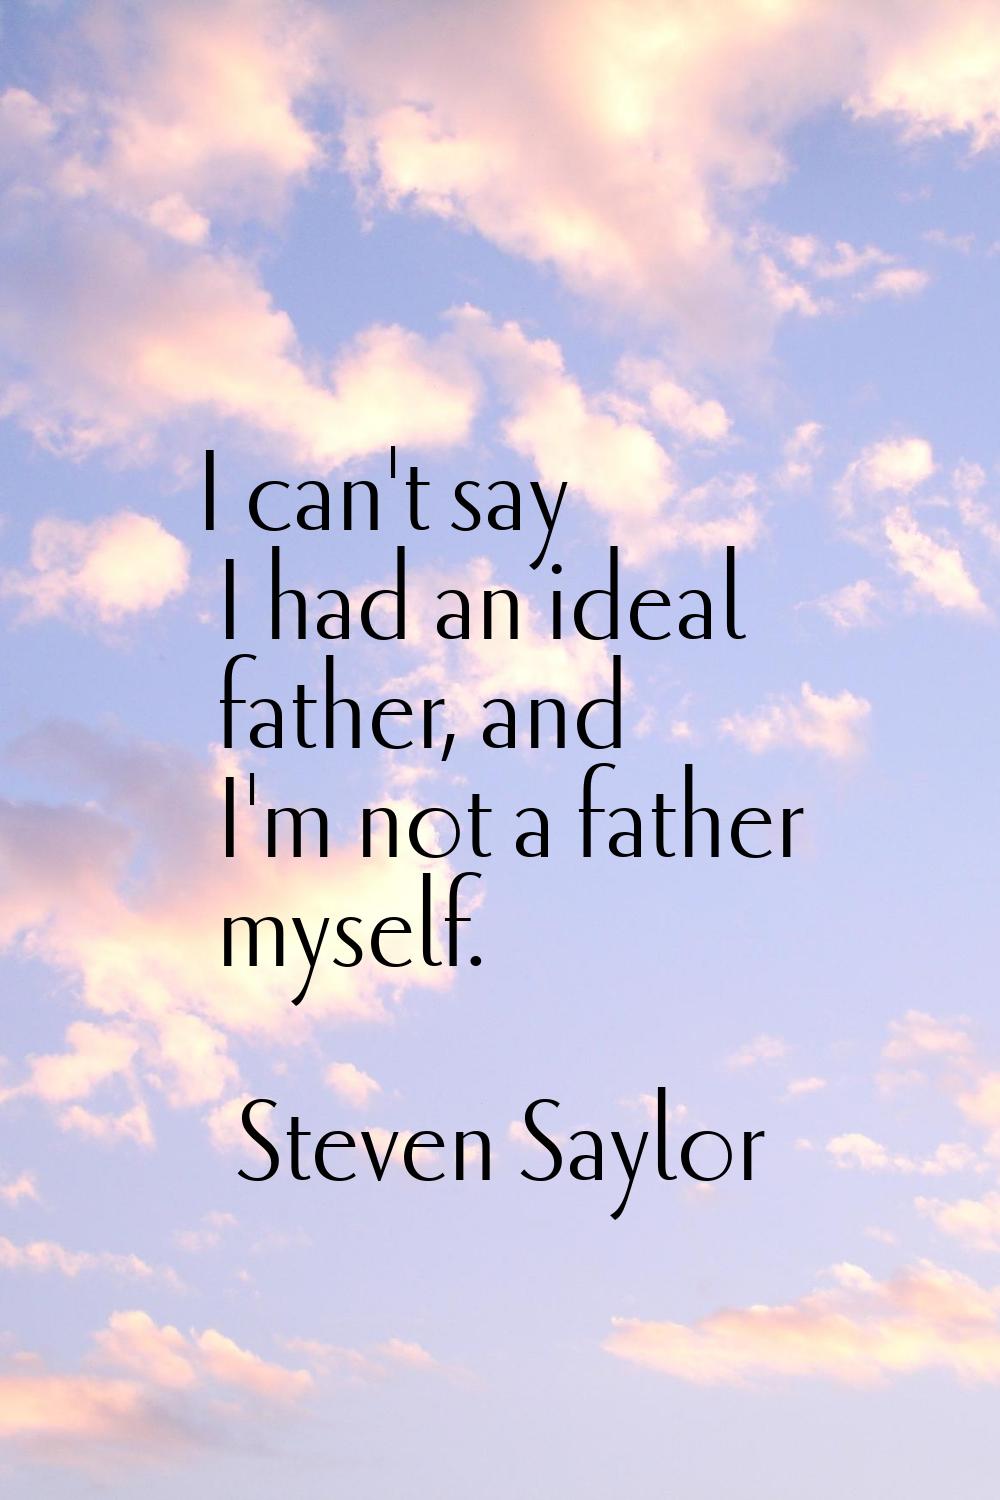 I can't say I had an ideal father, and I'm not a father myself.